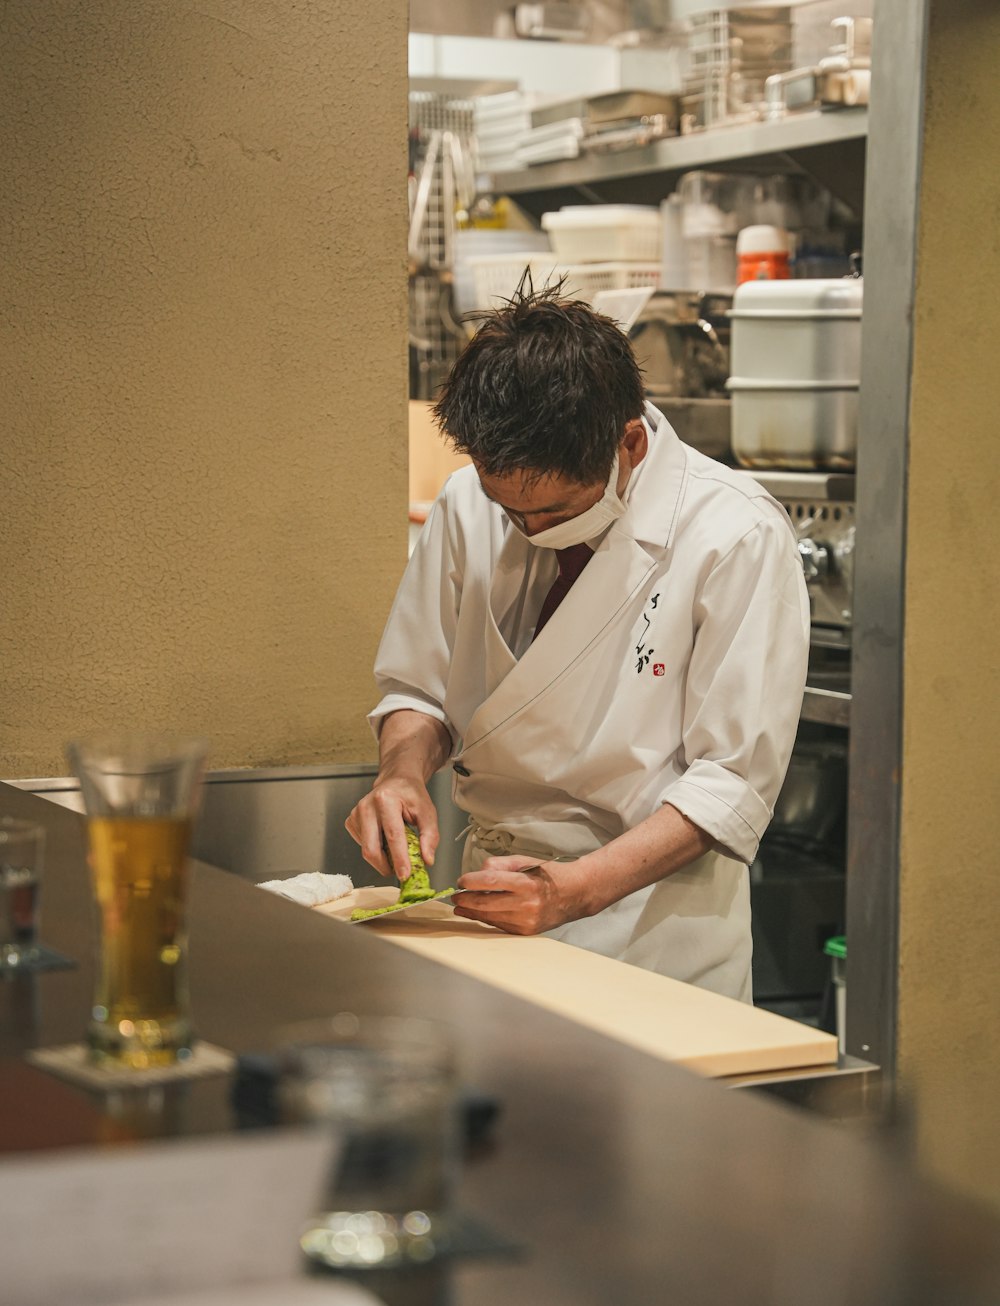 a man in a chef's uniform preparing food in a kitchen